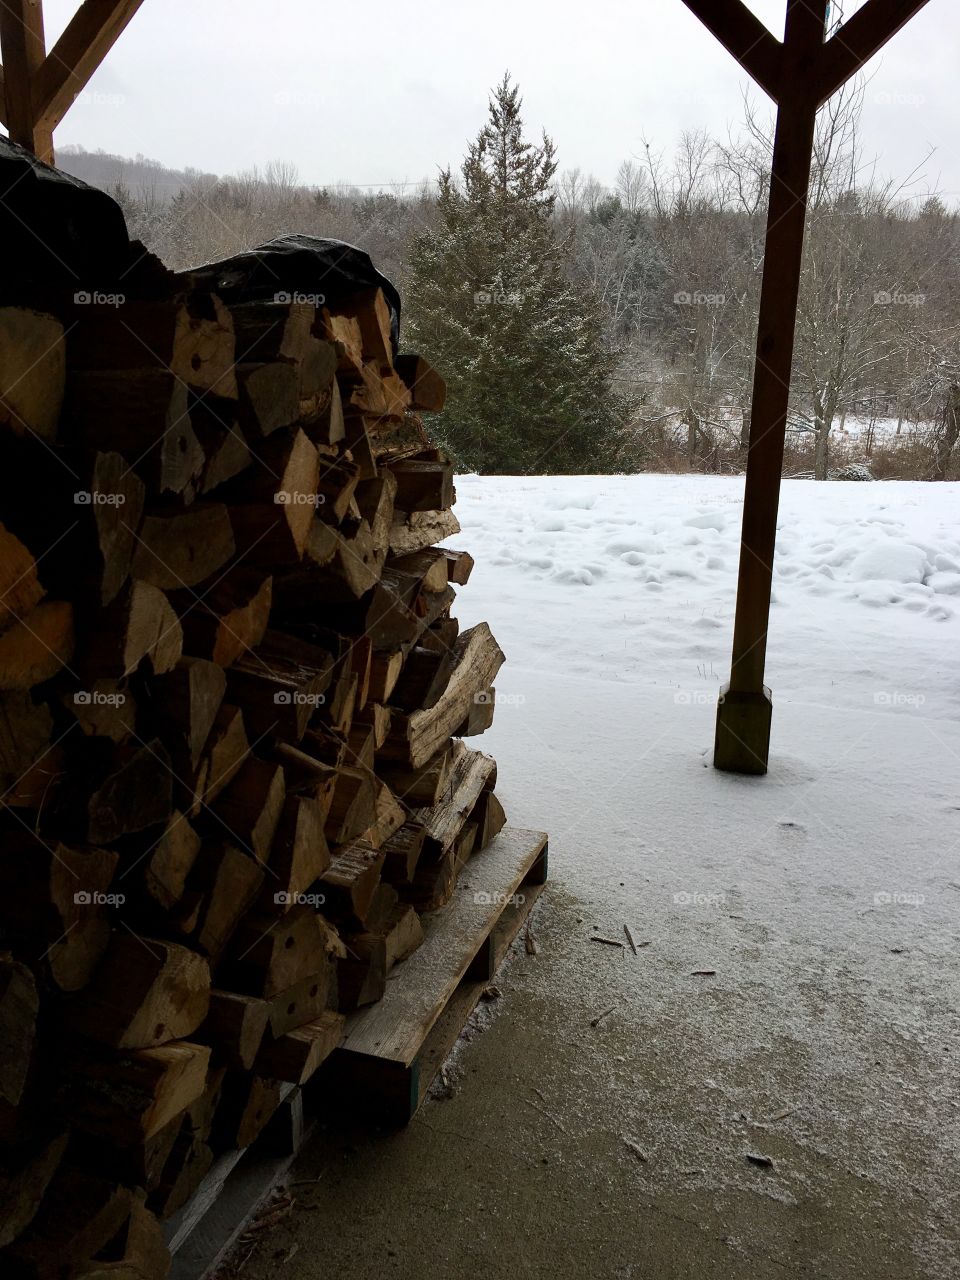 Winter heat, wood stove supply